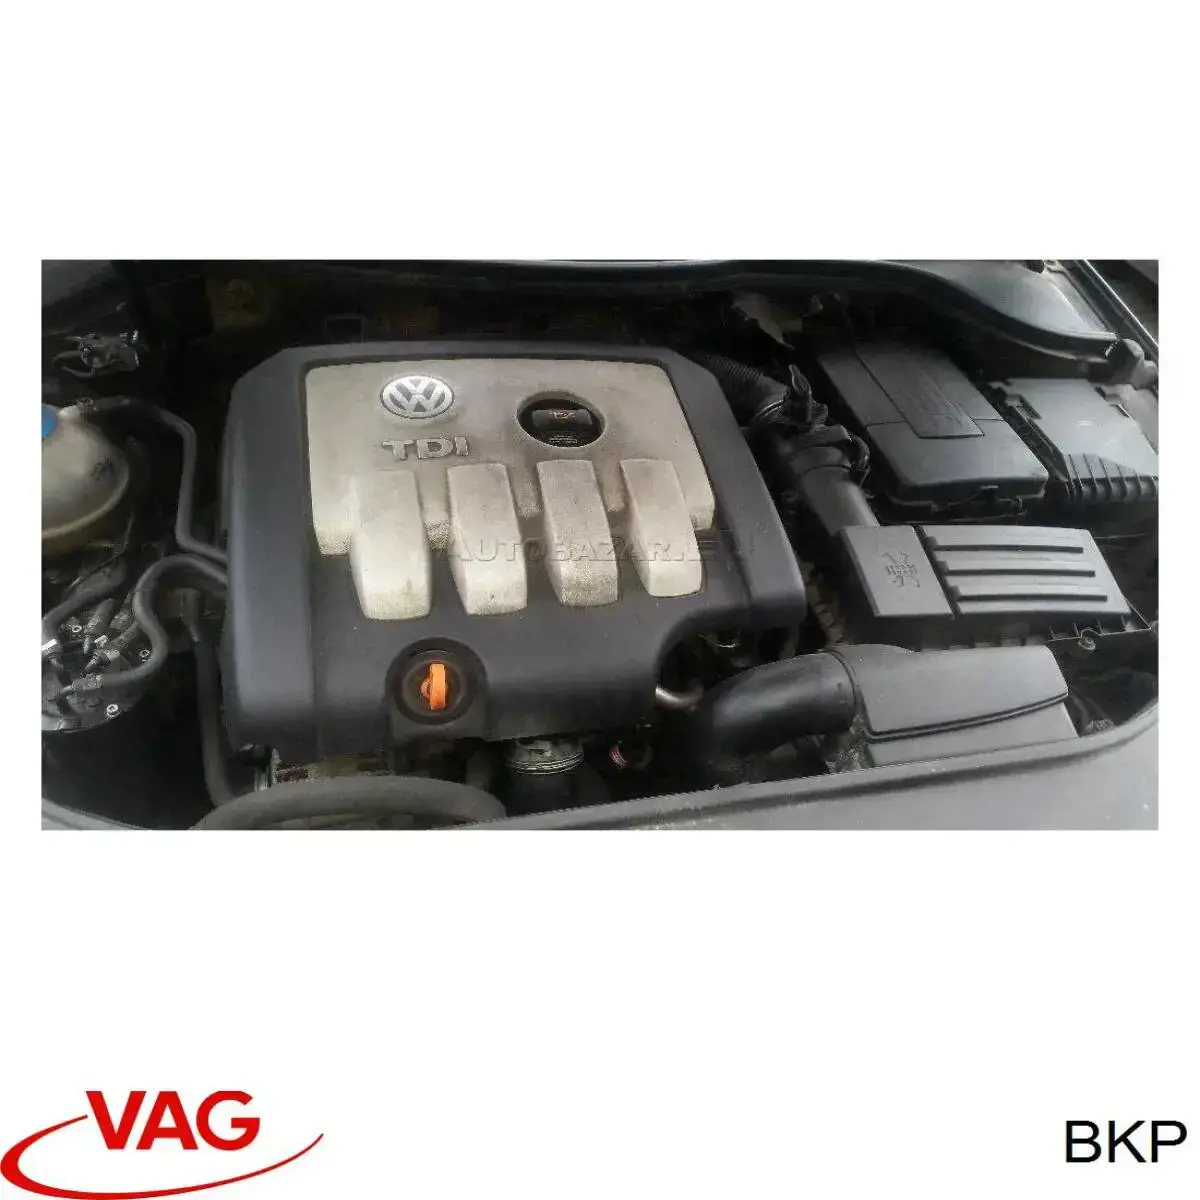 BKP VAG motor completo